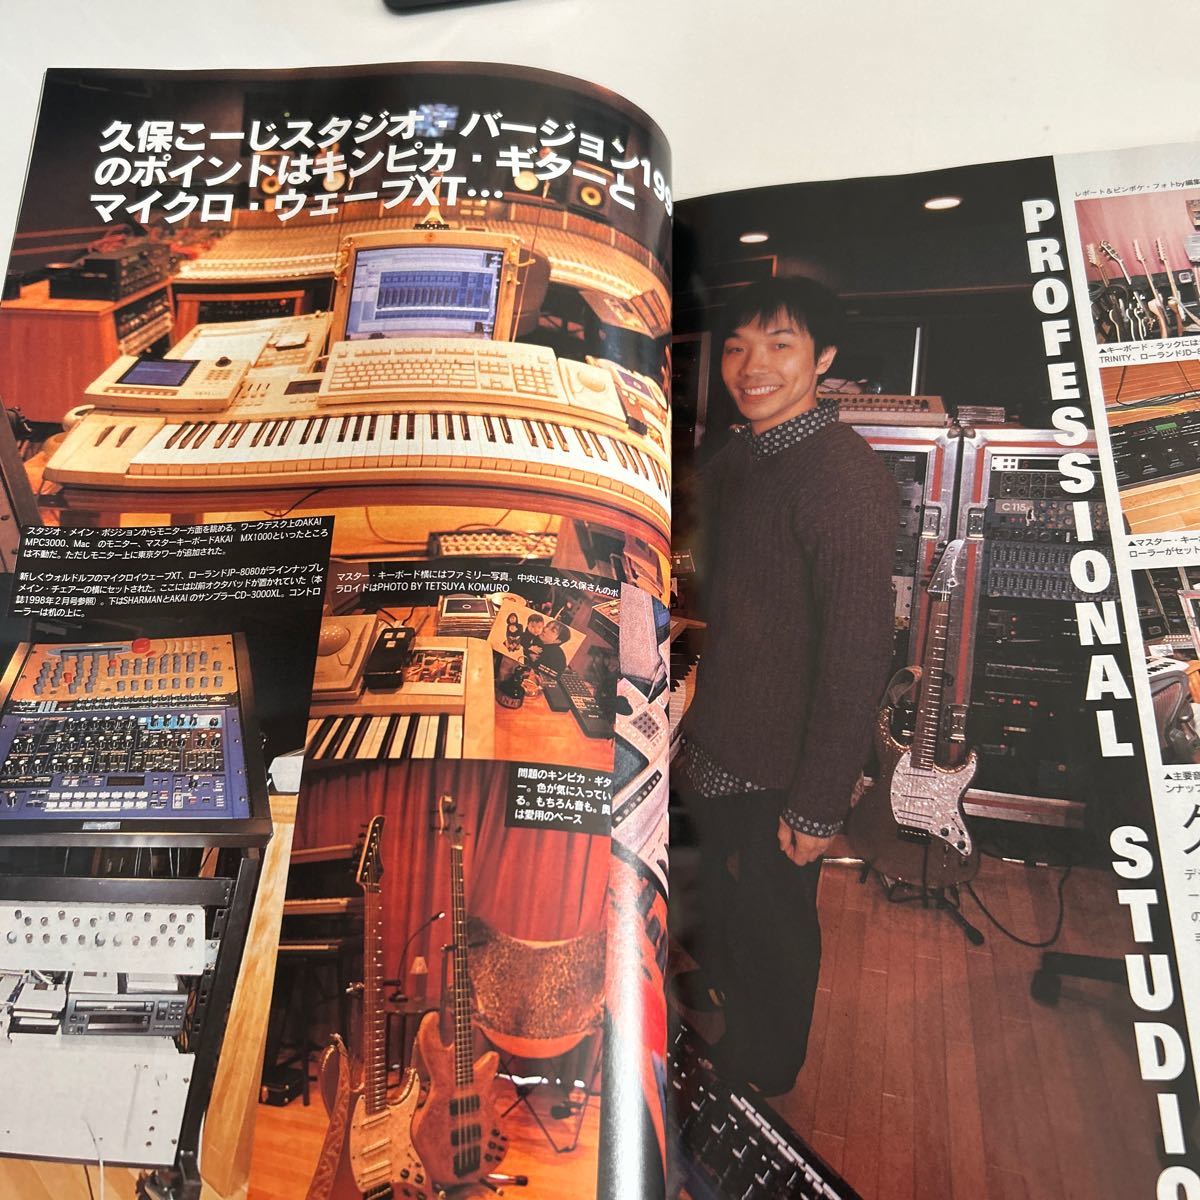  клавиатура специальный 1999 год 6 месяц keyboard Special KB талон isiiKAN Komuro Tetsuya Sakamoto Ryuichi Asakura Daisuke Yamaha DTM Synth Yamaha Techno 